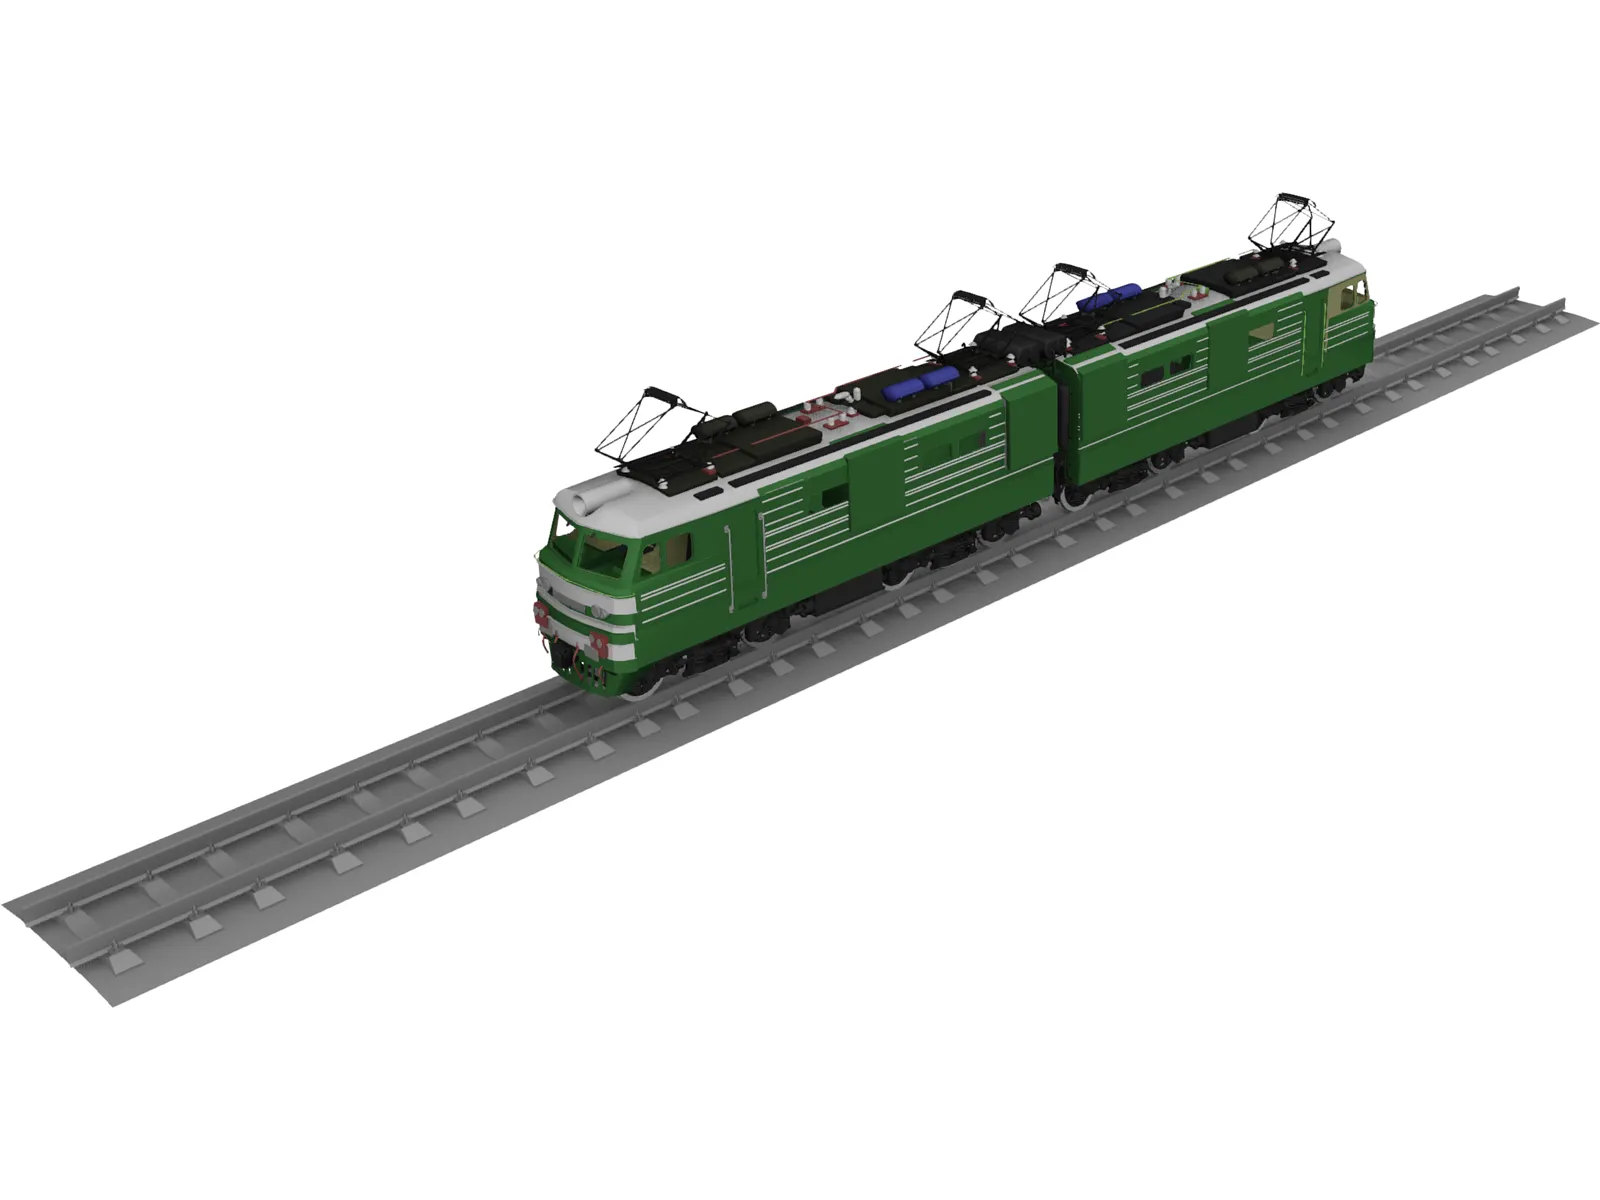 Locomotive Train Russian 3D Model